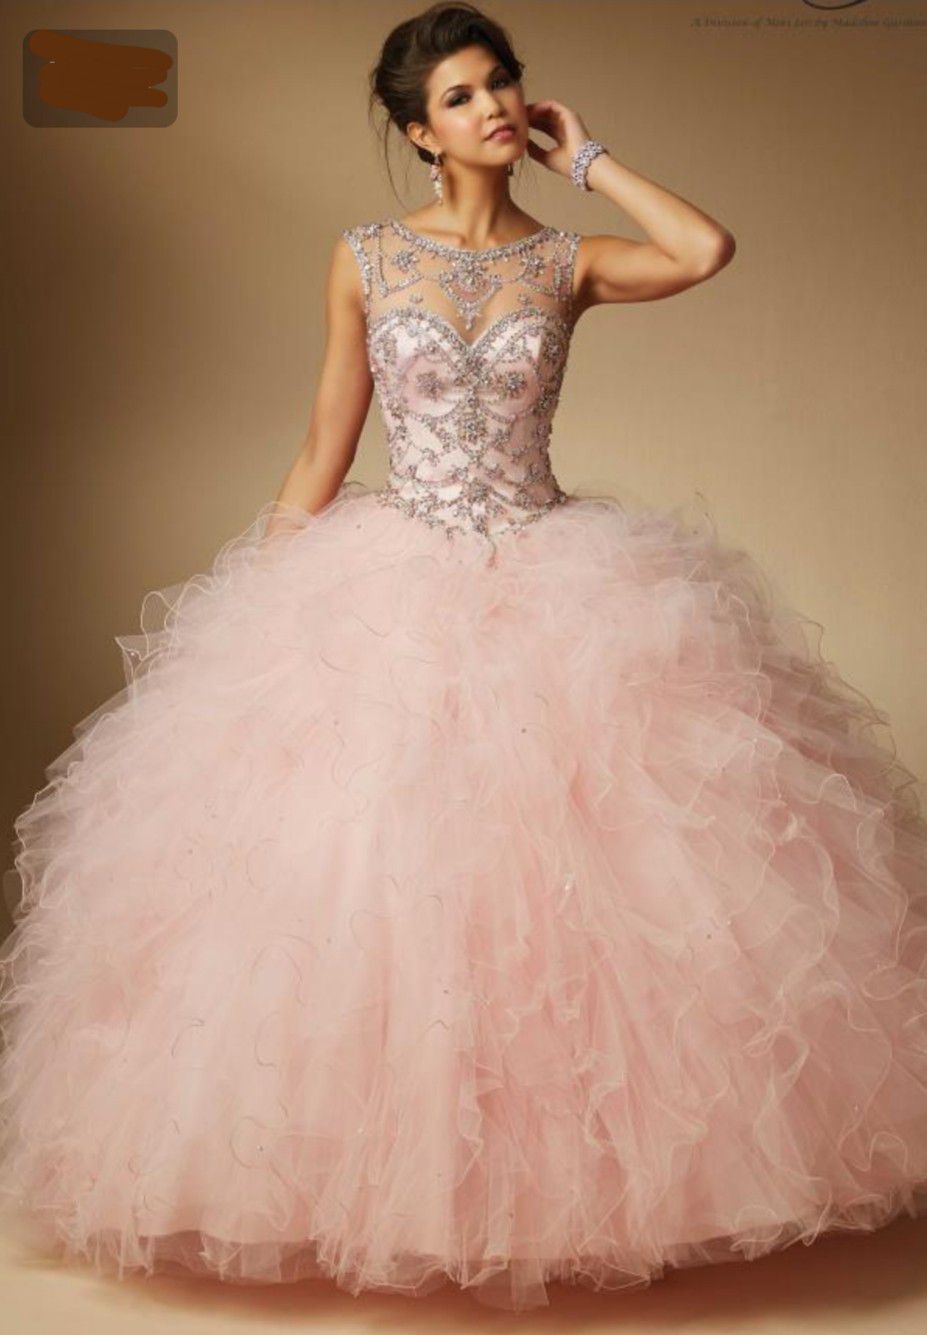 Quiceañera dress........... color: pink/blush